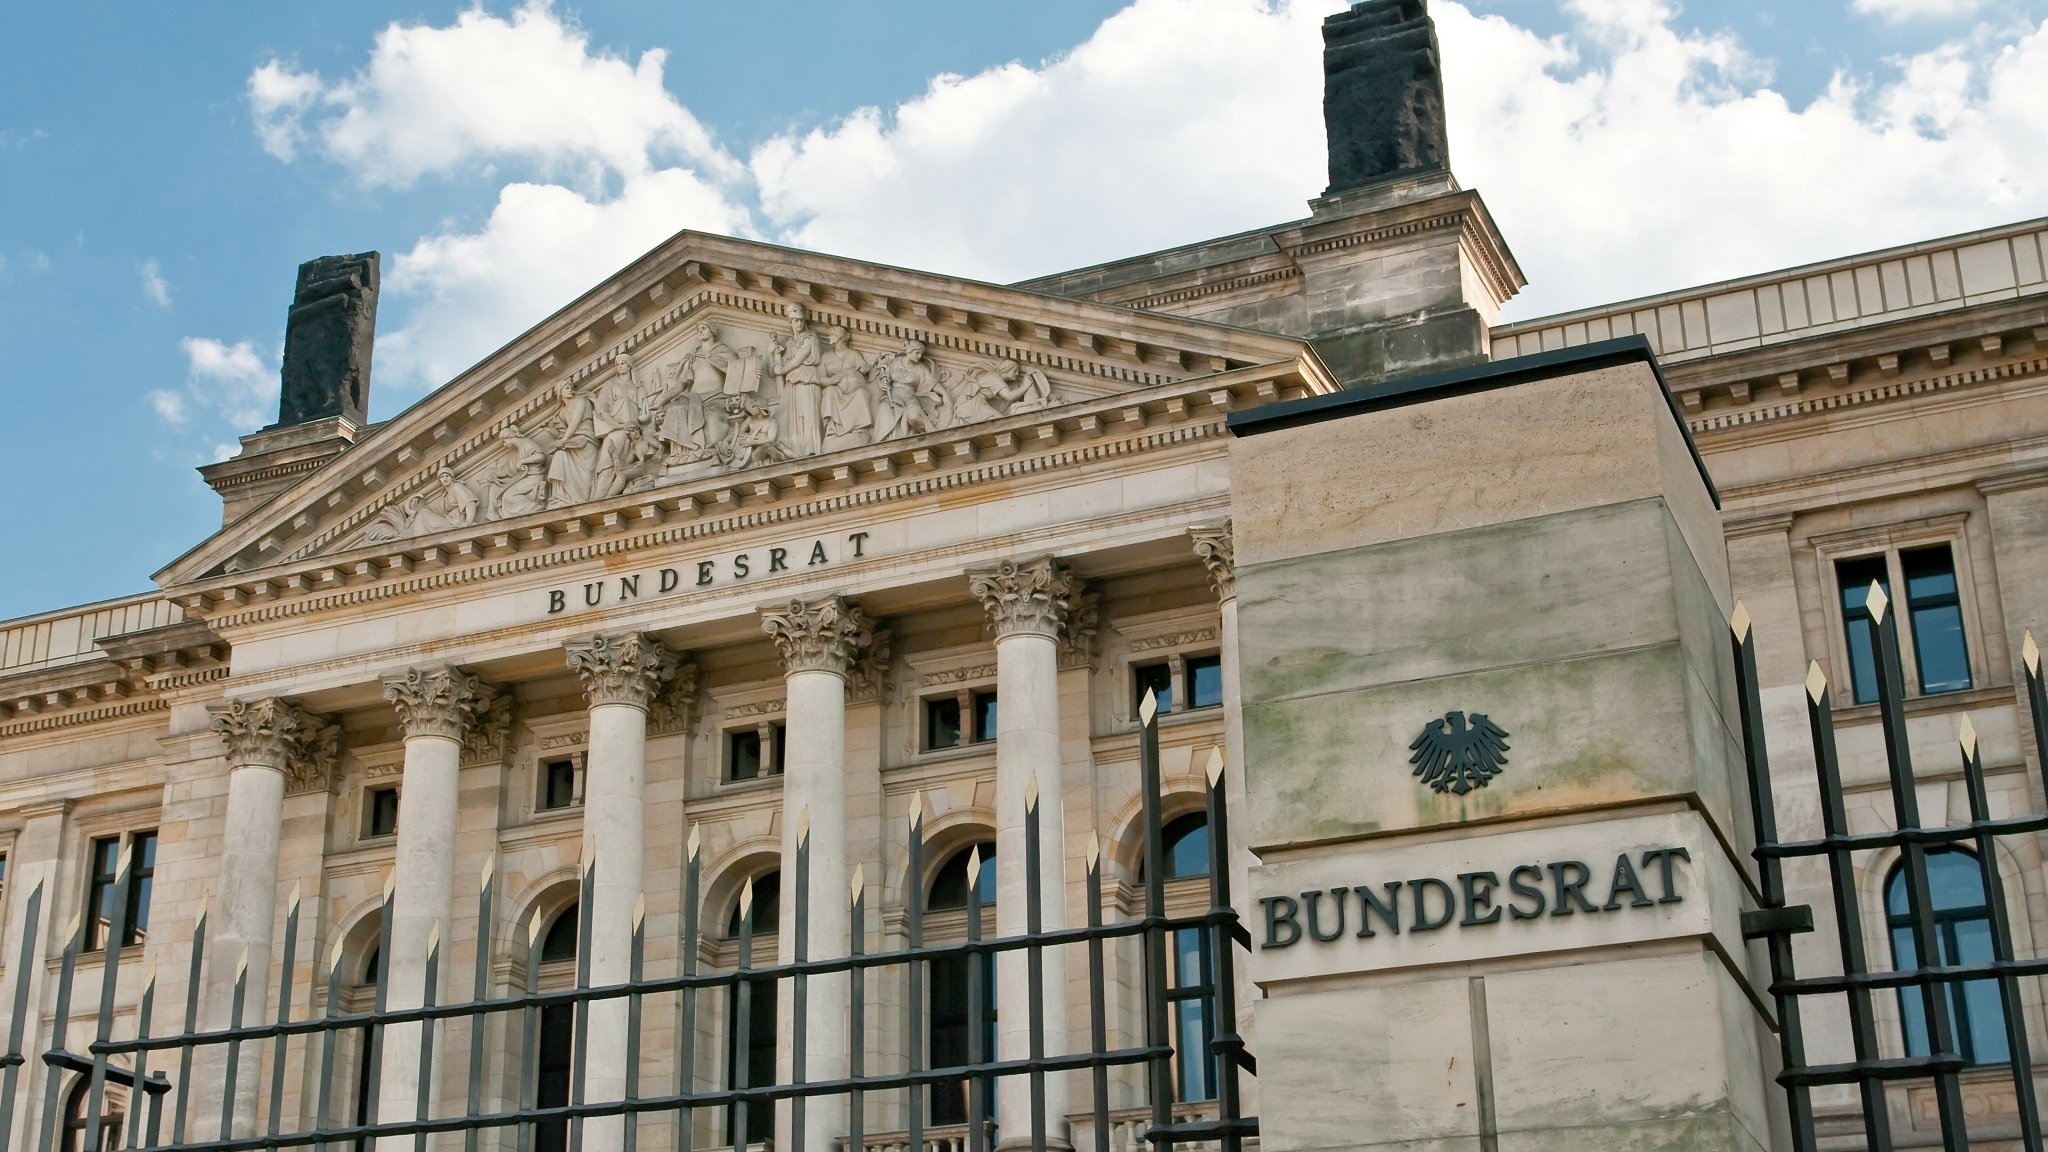 Gebäude des Bundesrats in berlin